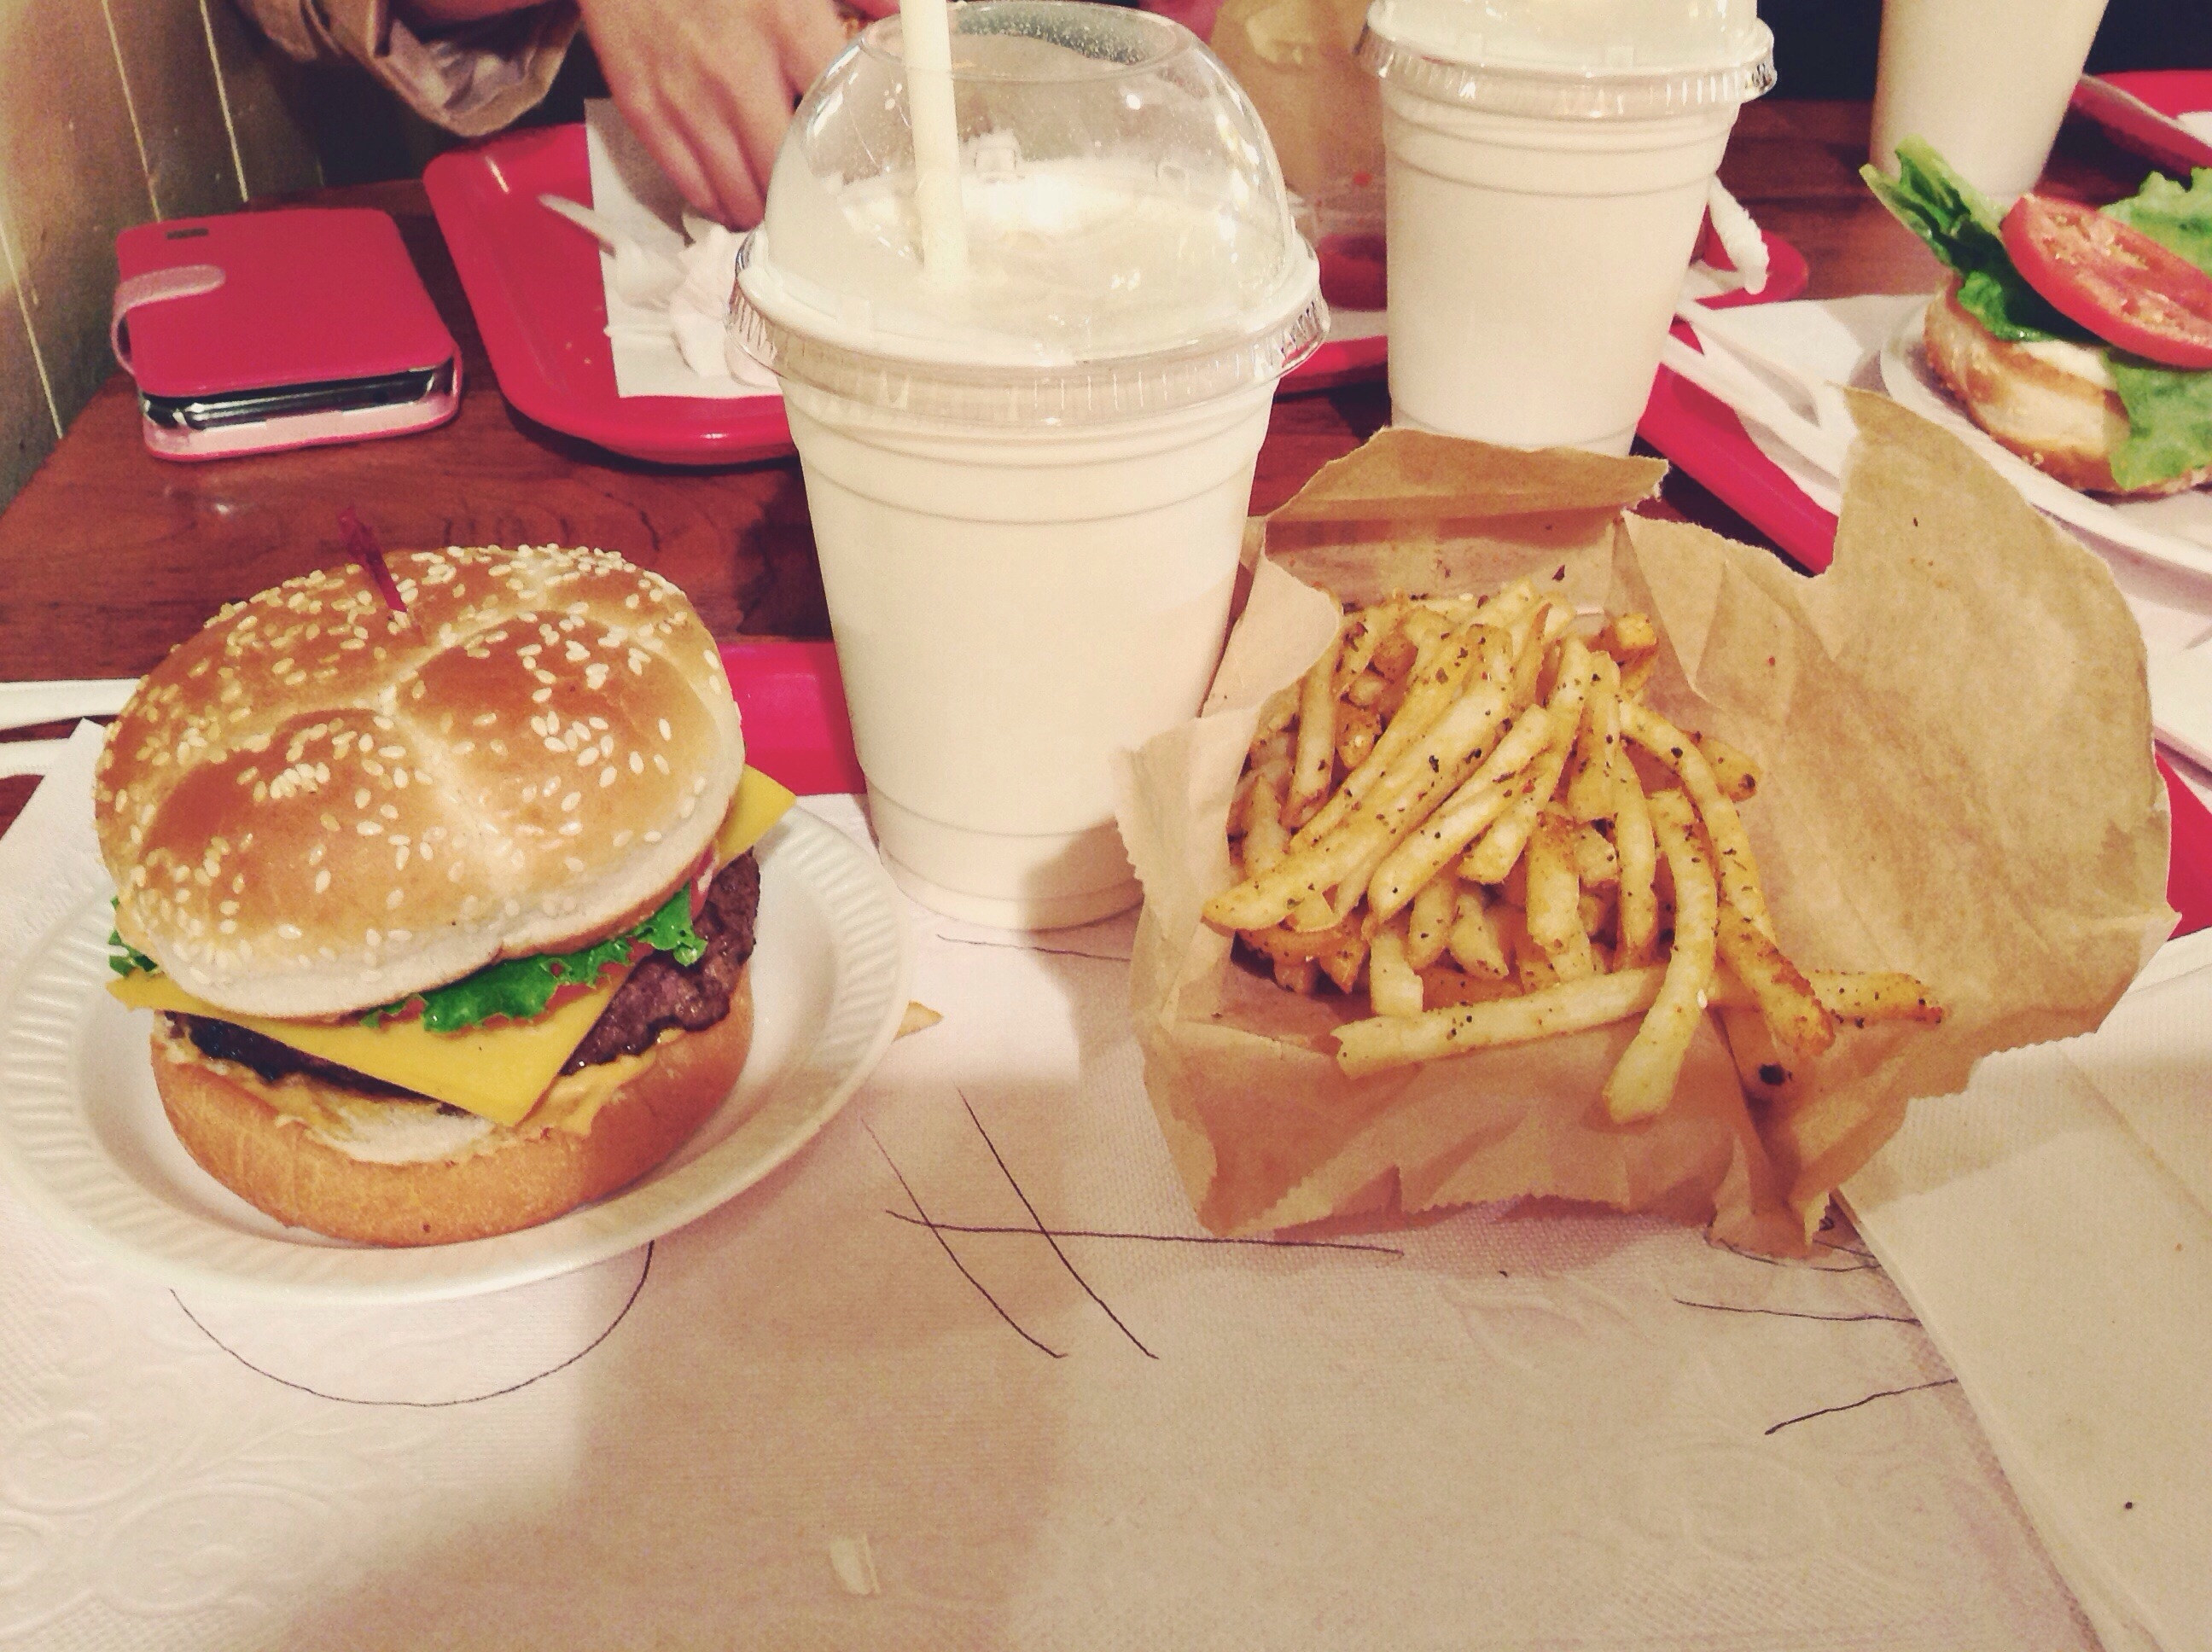 A burger, shake, and fries at a restaurant